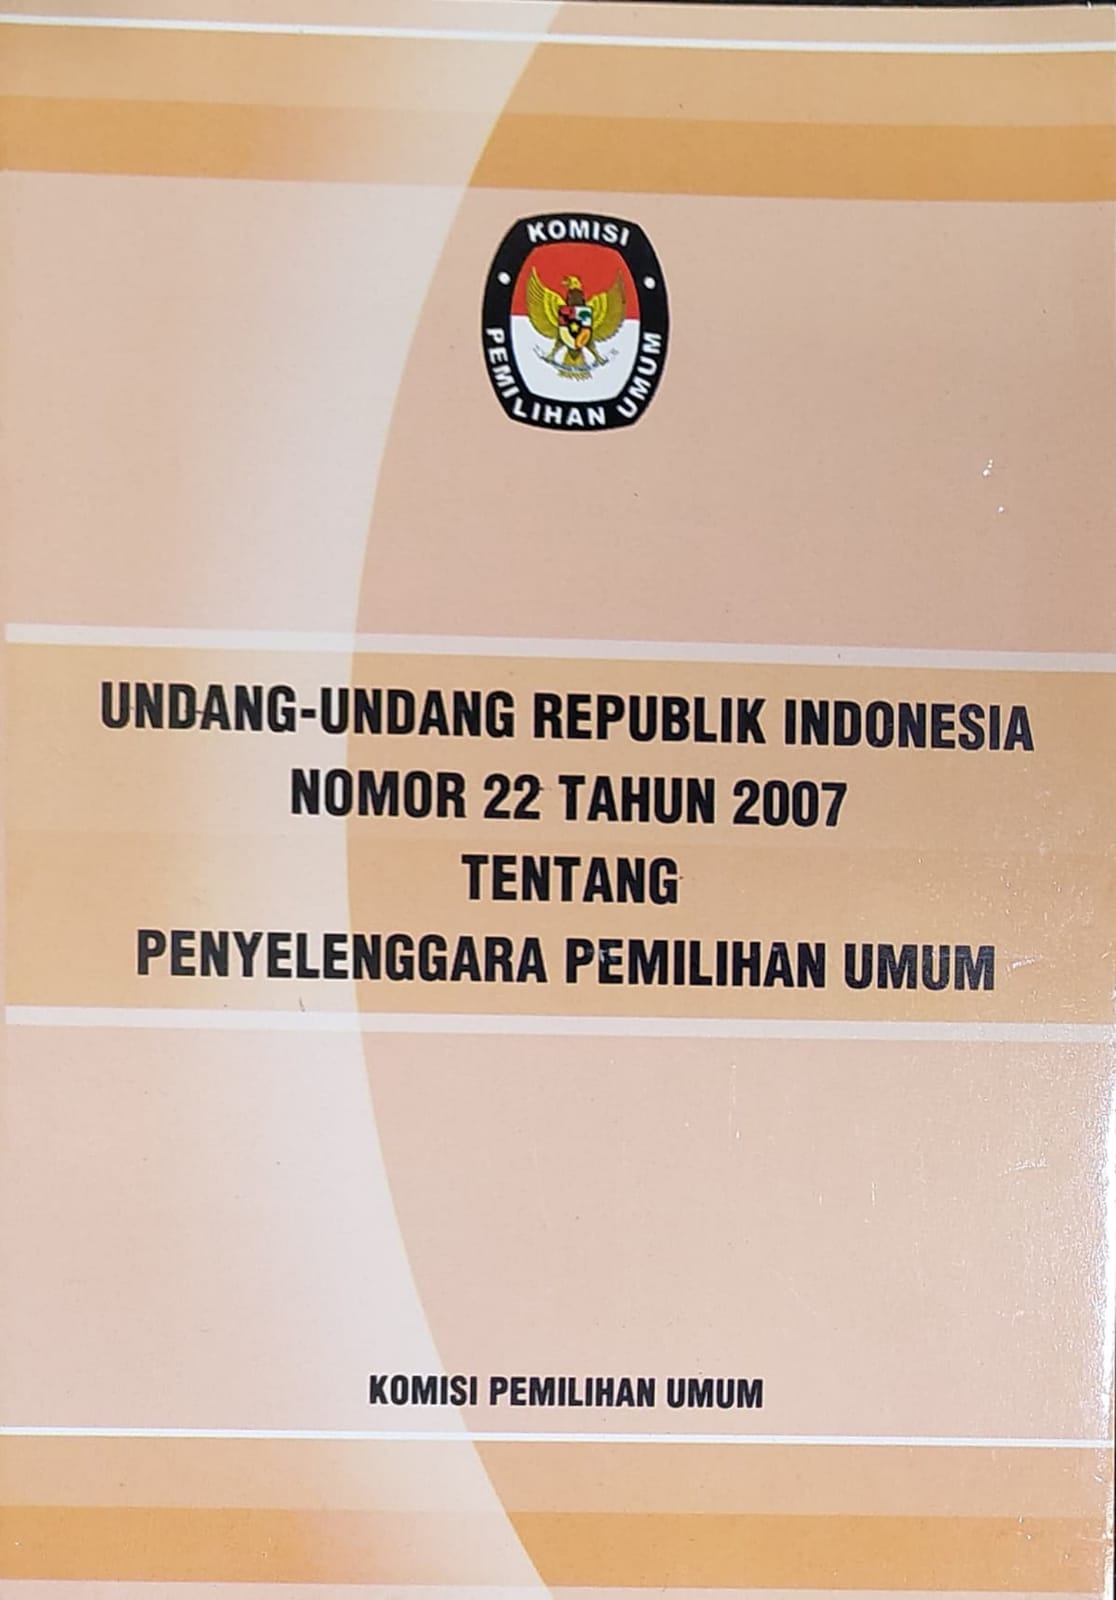 Undang-undang republik indonesia nomor 22 tahun 2007 tentang penyelenggara pemilihan umum